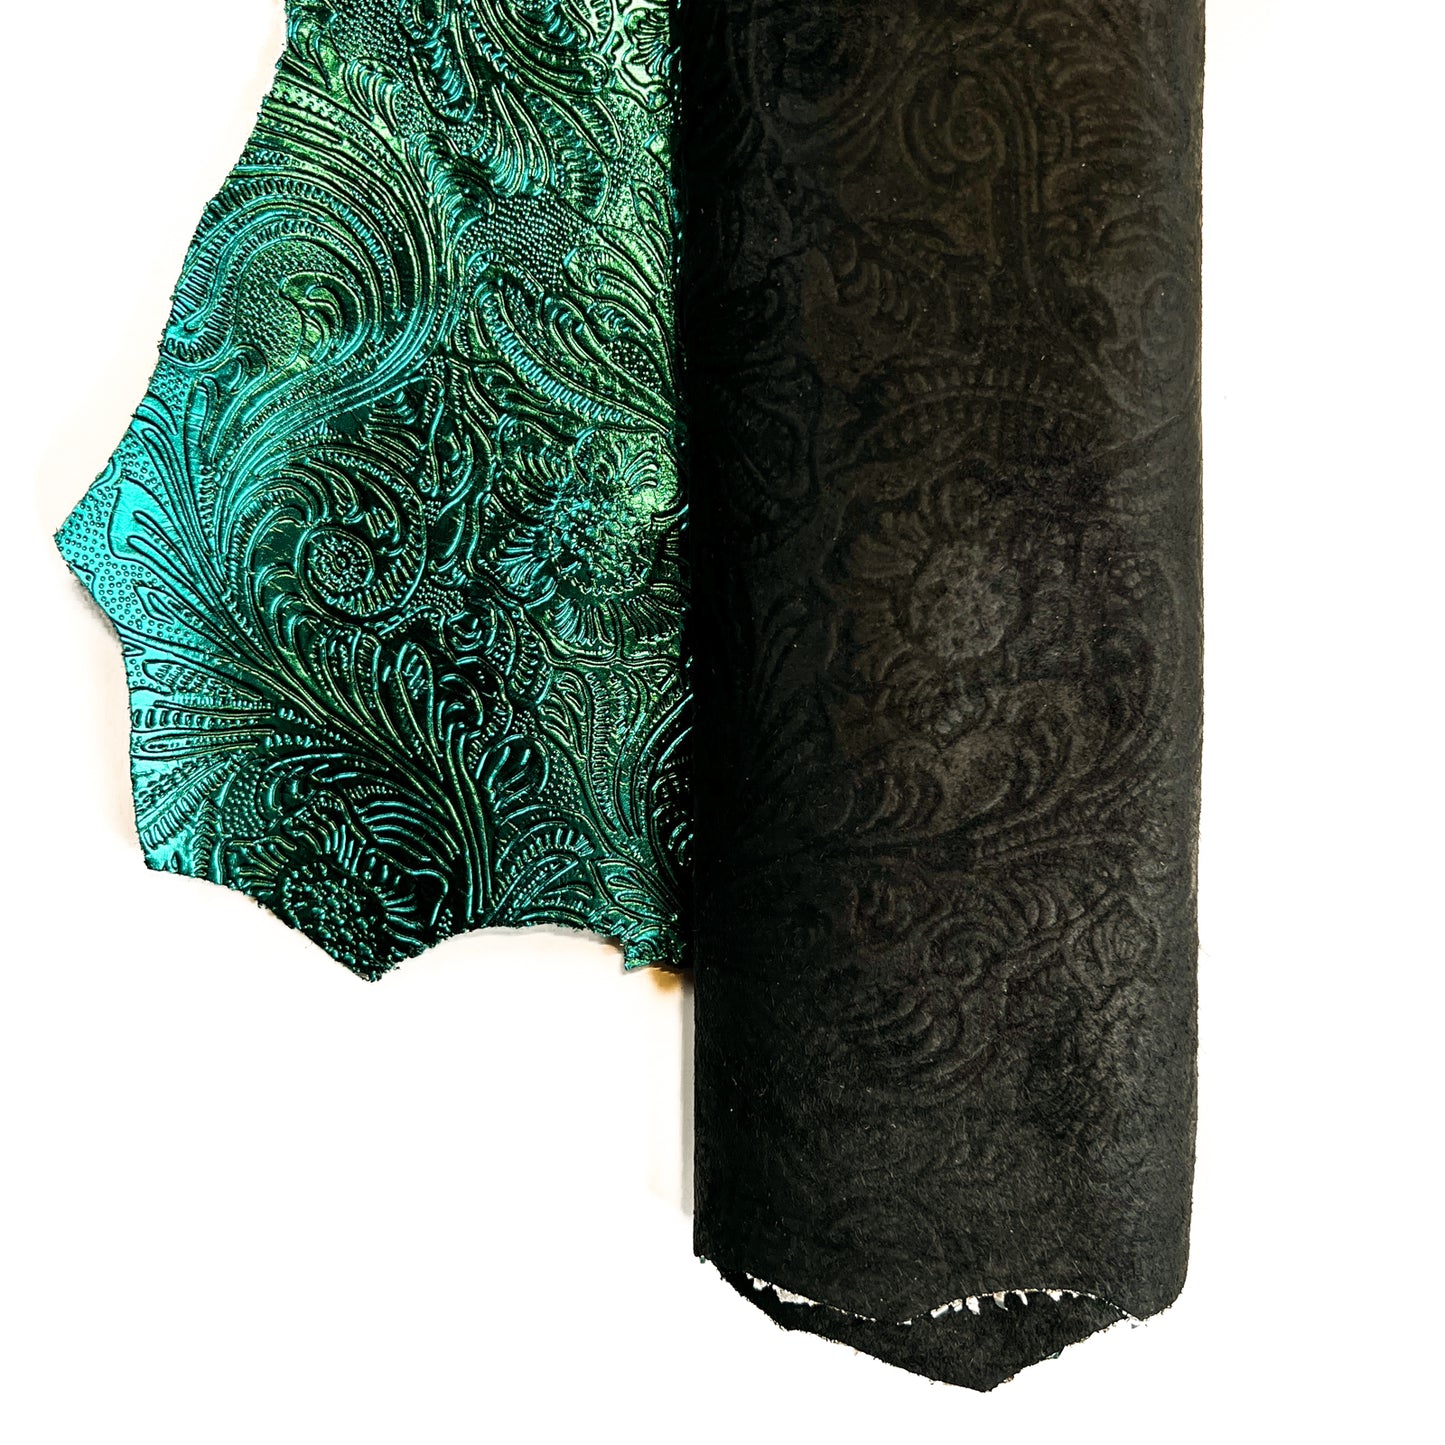 Emerald Green Metallic Lambskin With Flower Print  EMERALD FLOWERS 1466 0.7mm/1.75oz